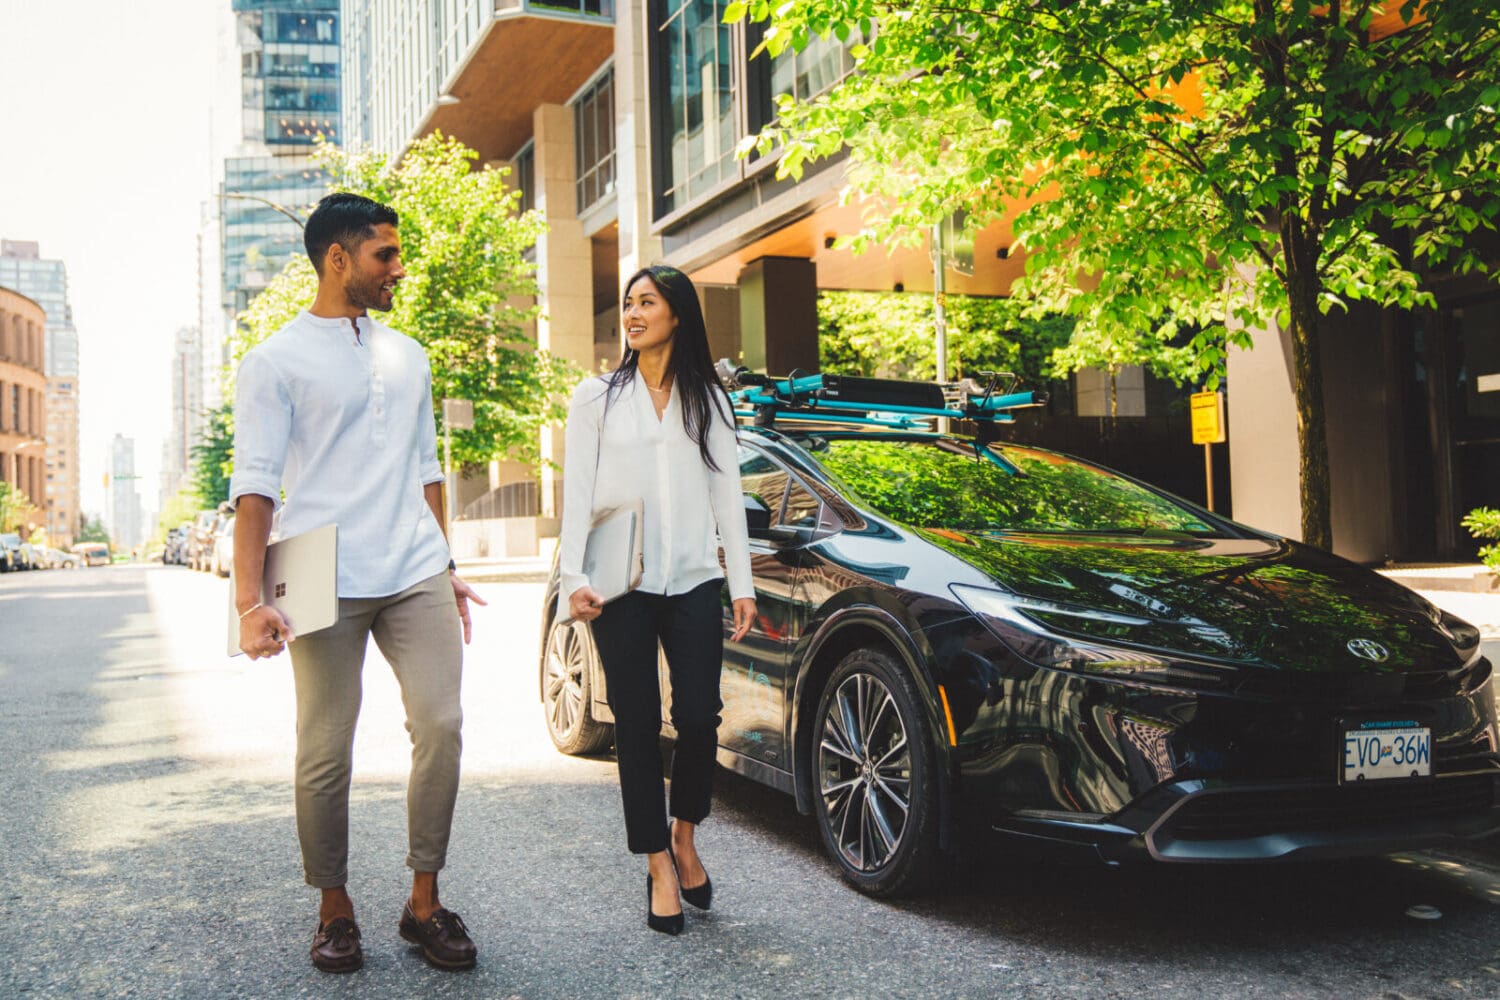 Need a car? Use Evo! – A new ISSofBC partnership